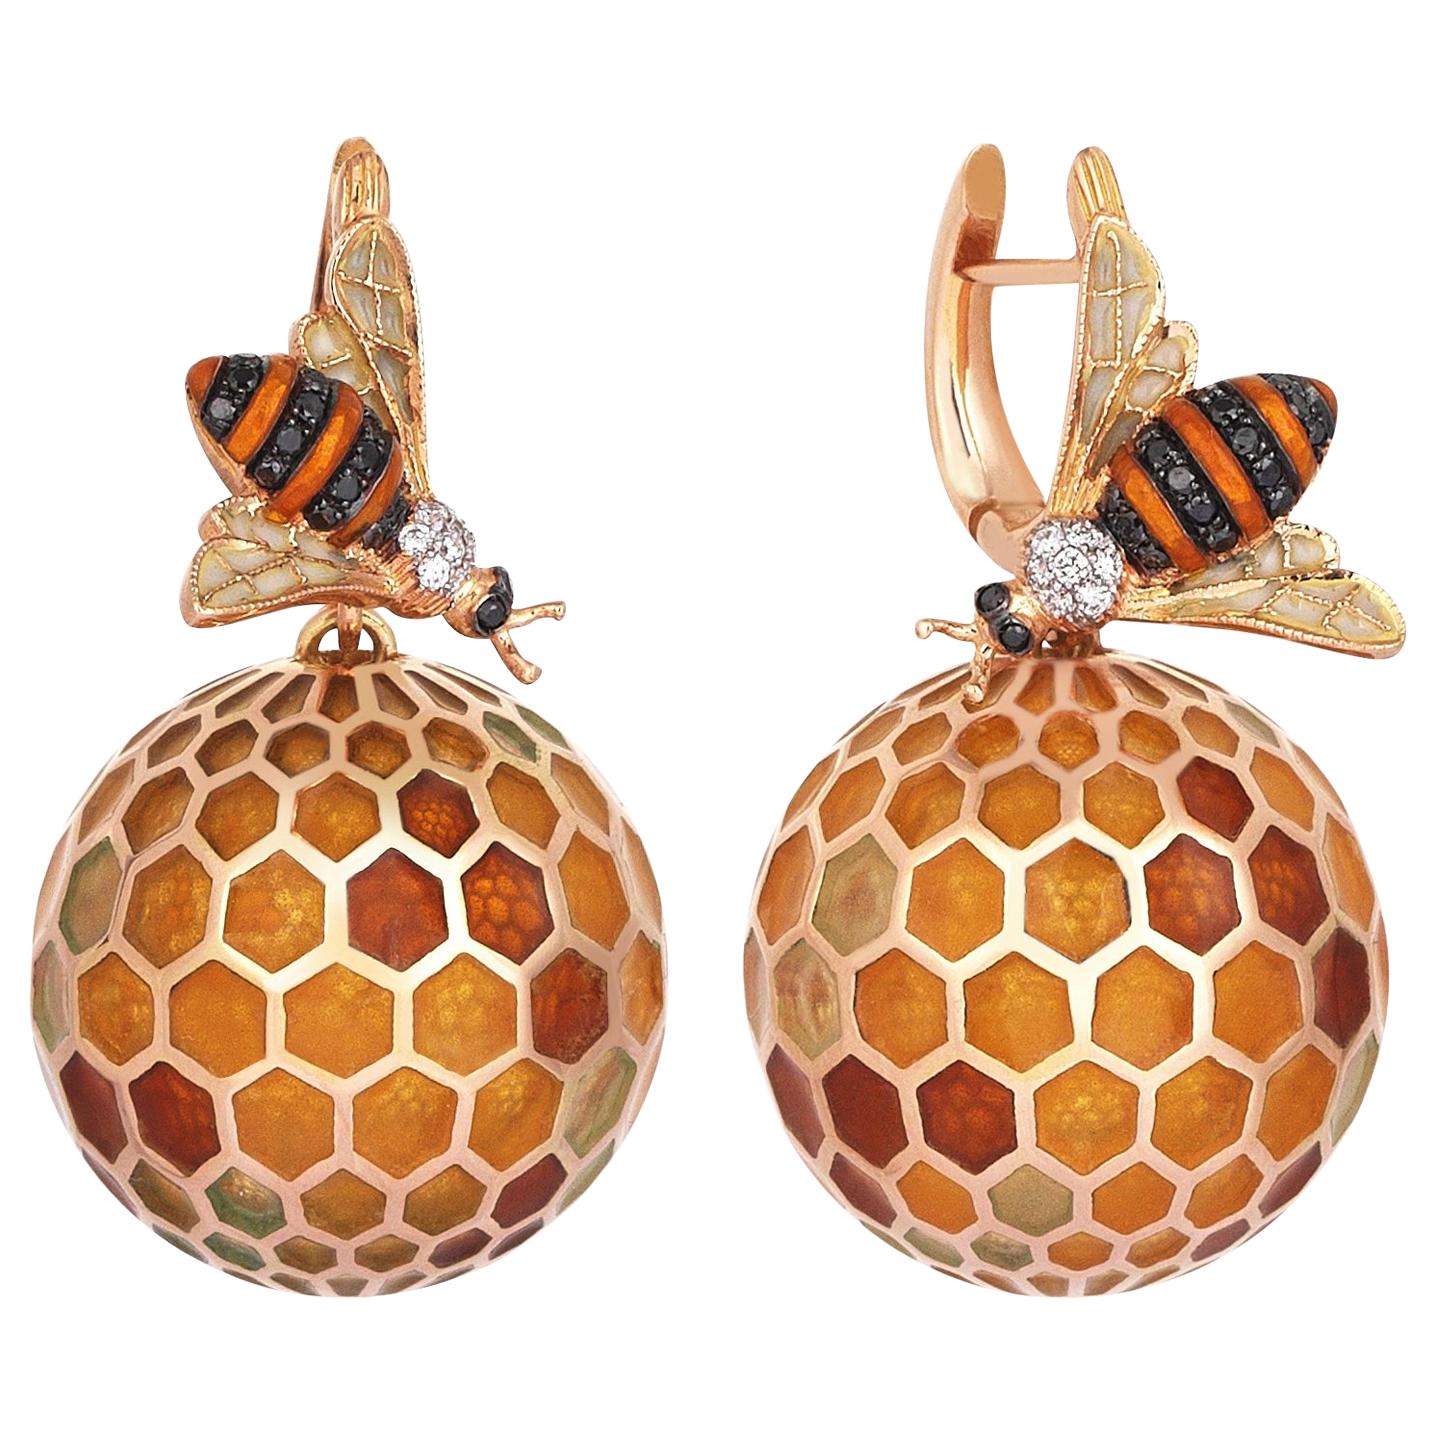  18 Kt 0.09 ct. Diamond , 02ct. Black Diamond Enamel Bee and Honey Comb Earrings For Sale